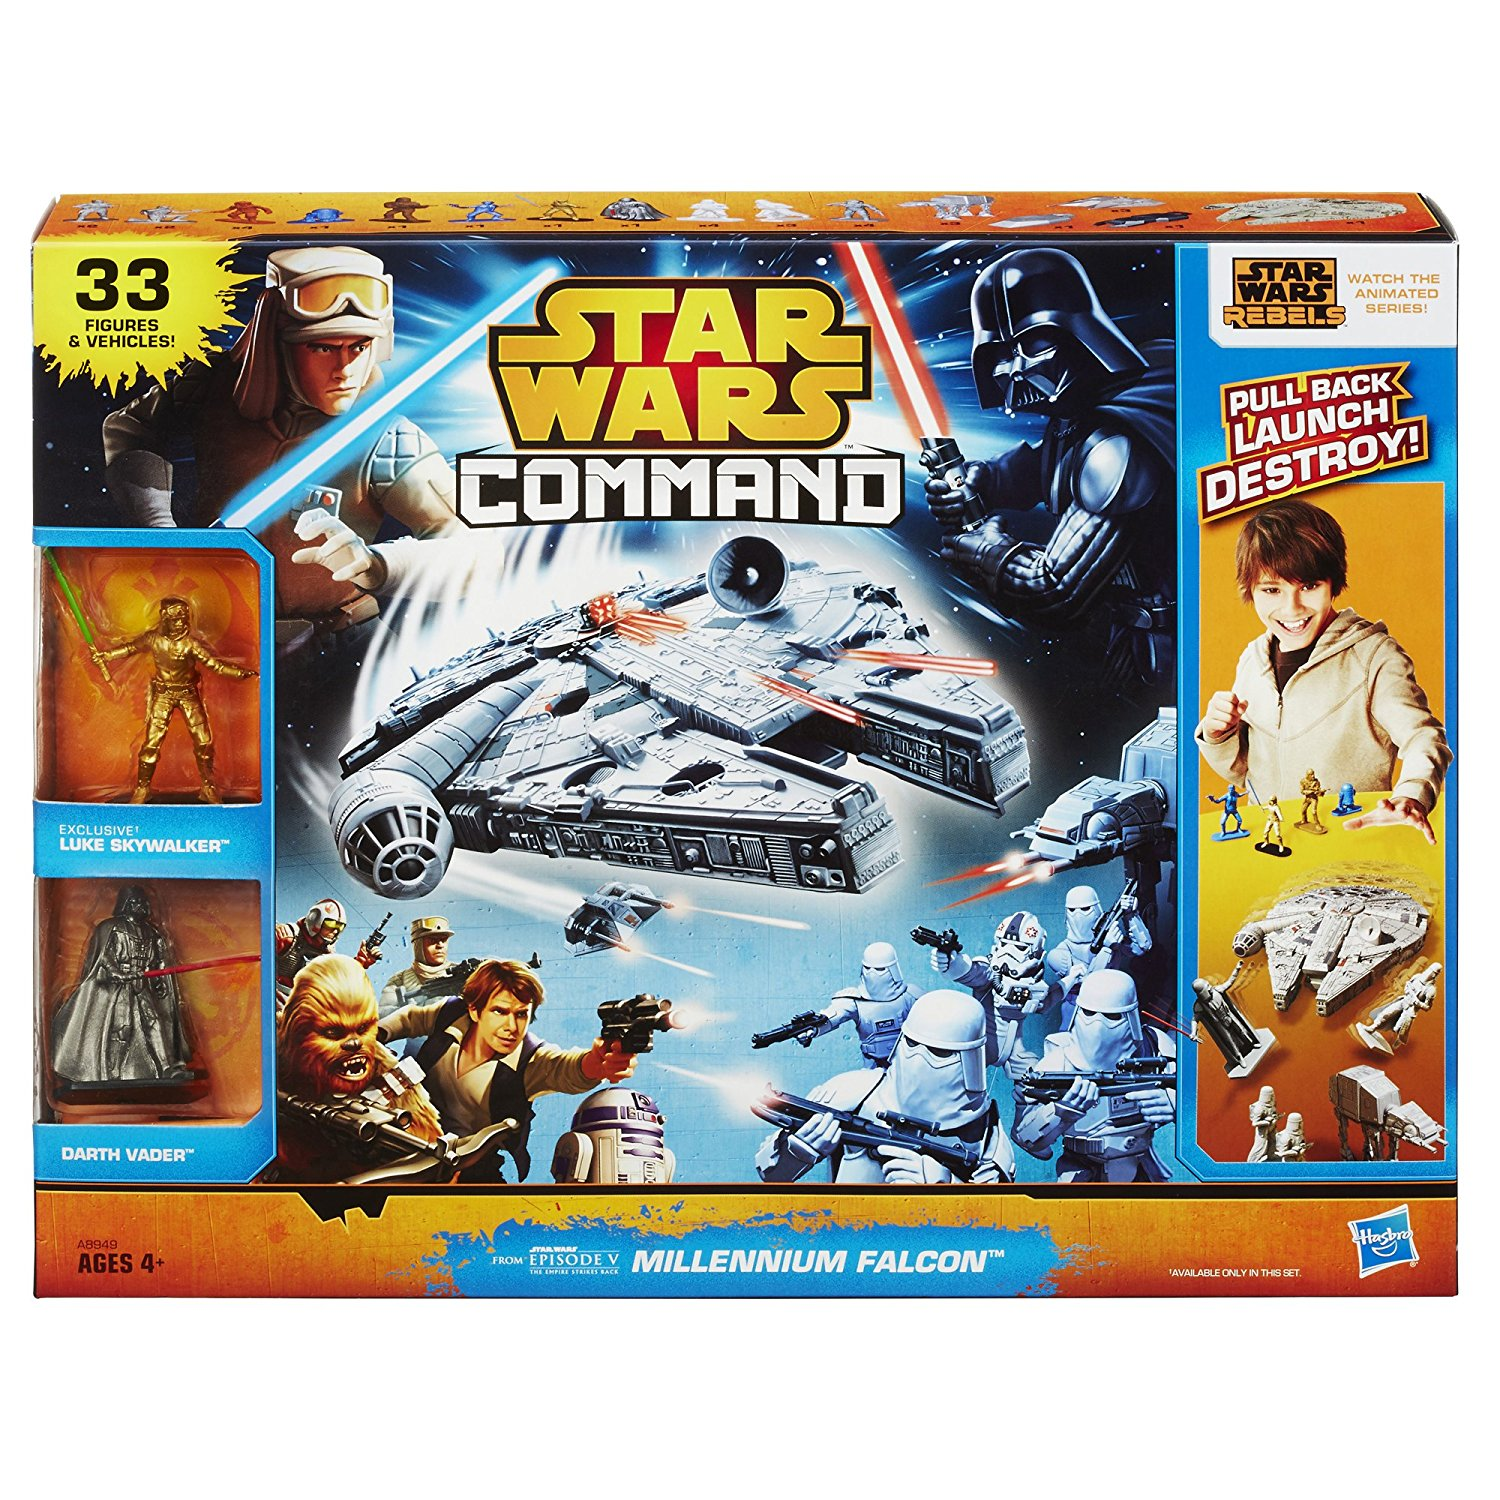 Star Wars Command Millennium Falcon Set Only $9.99!